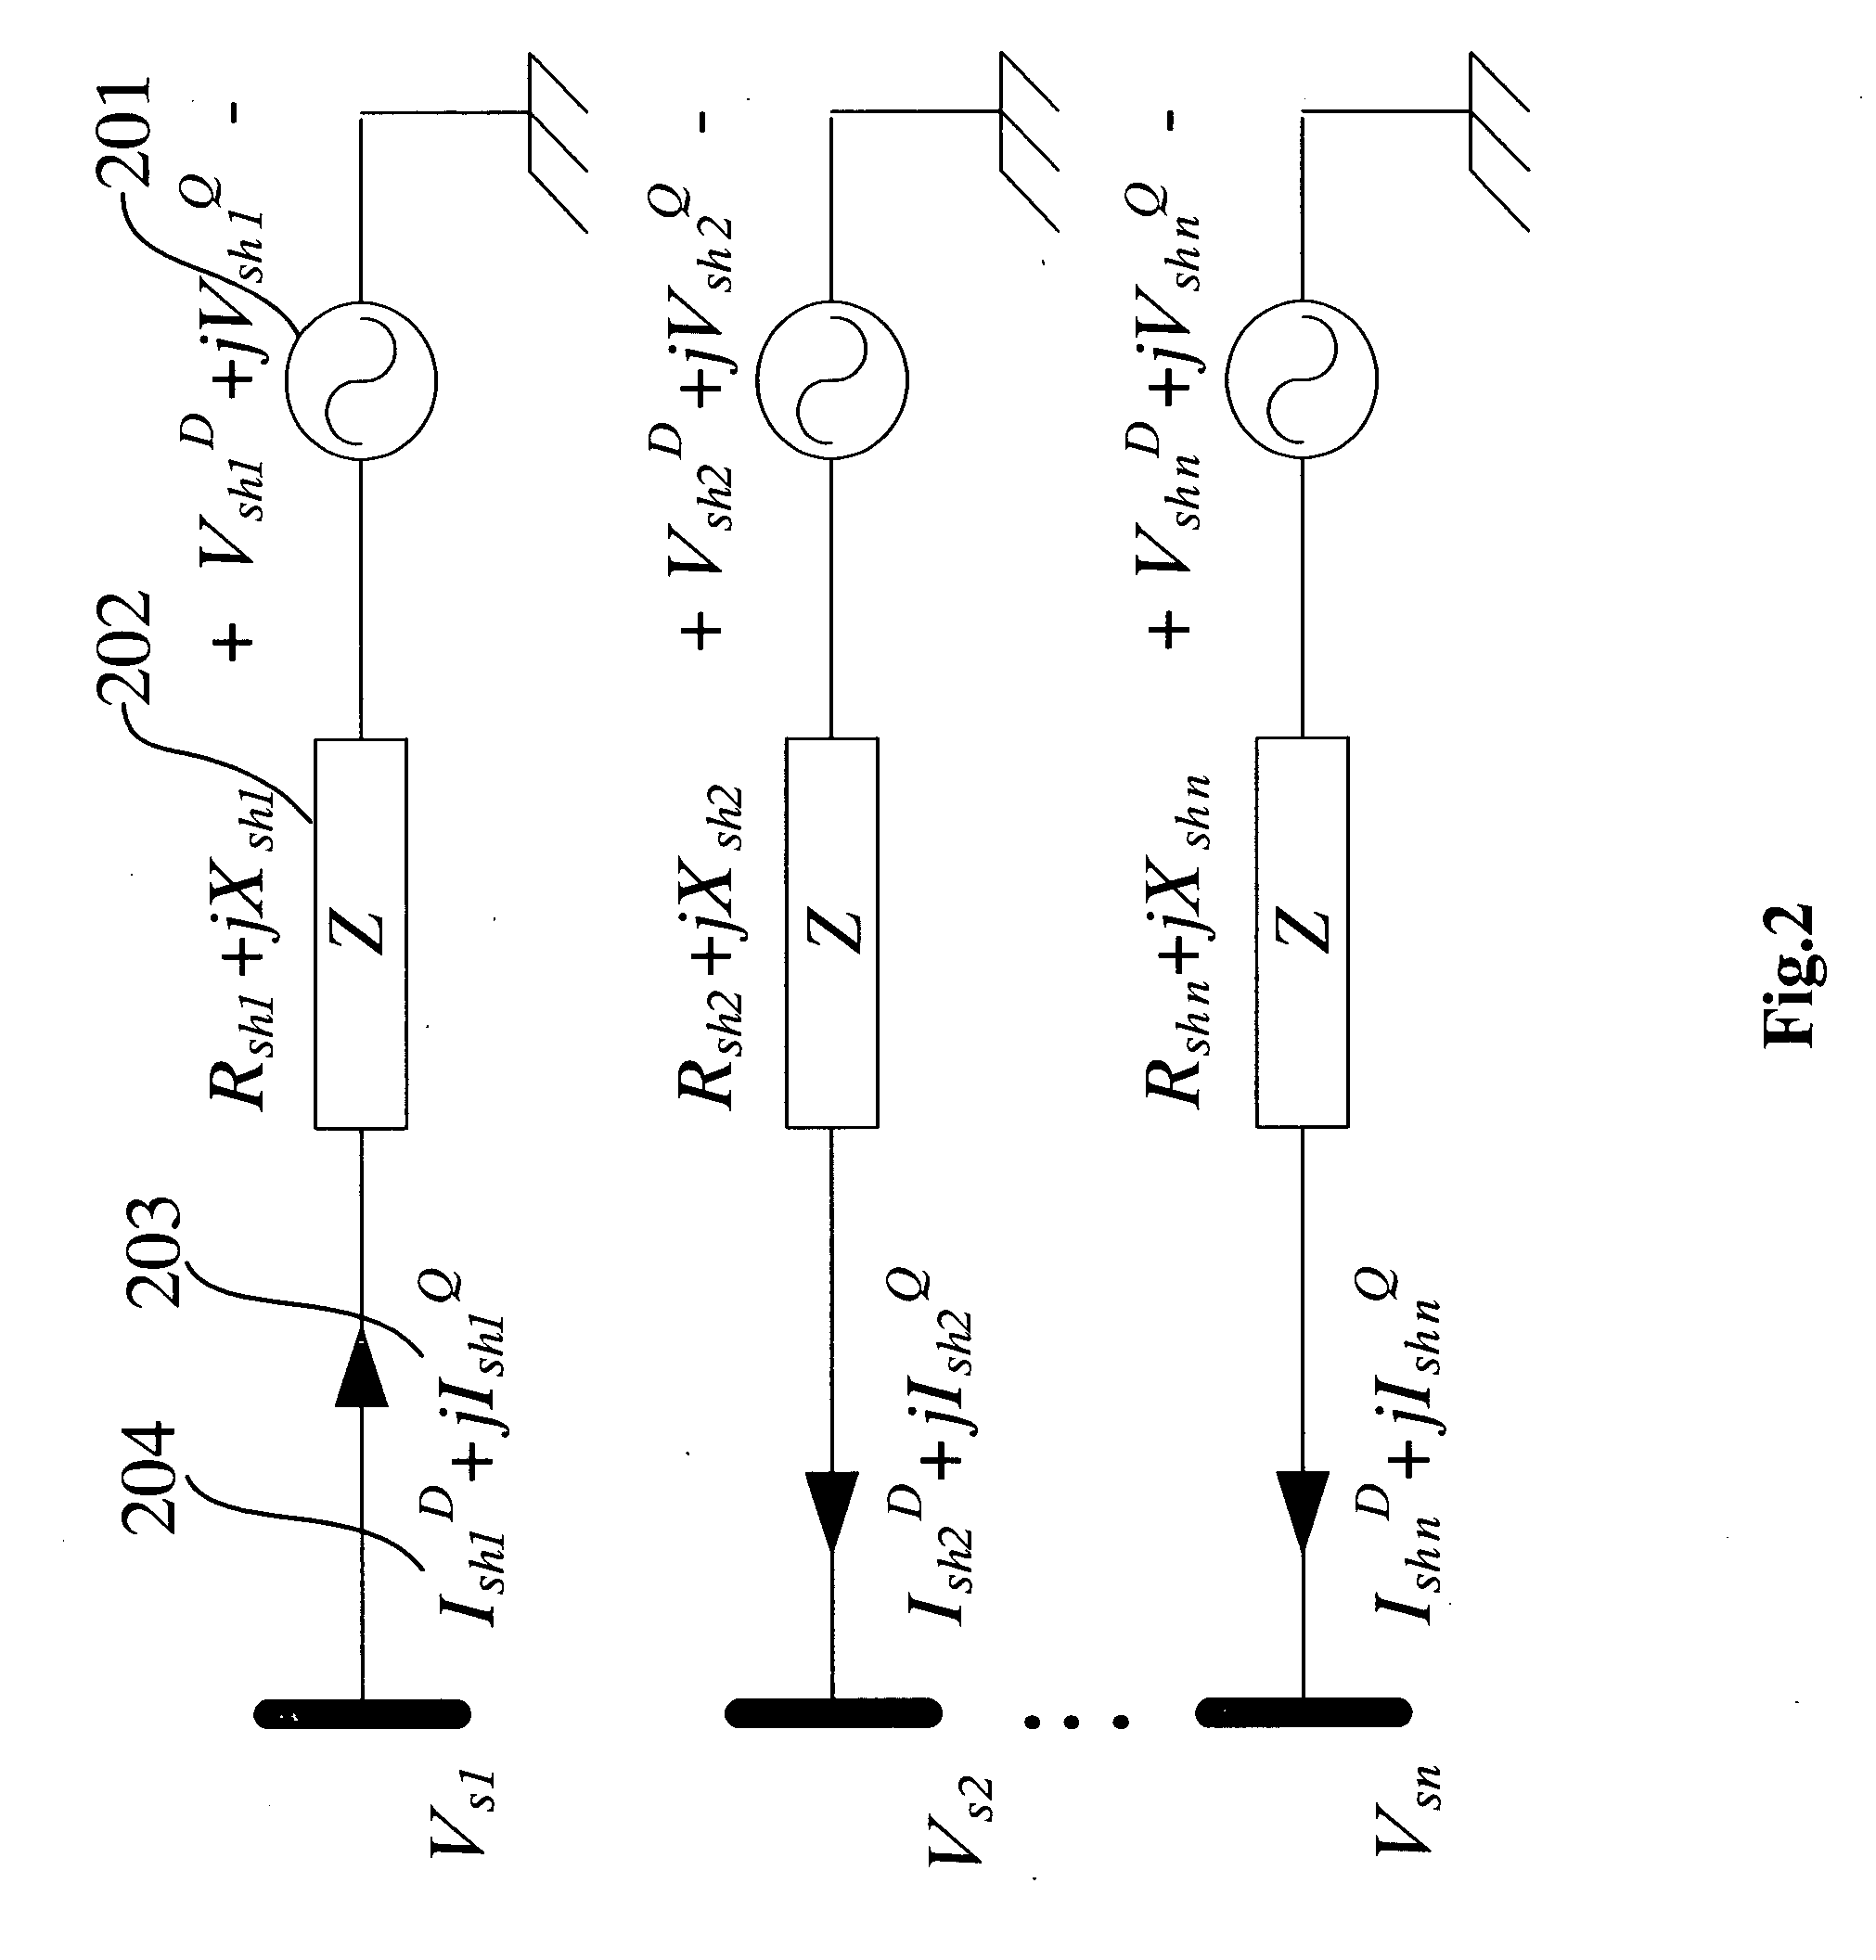 Method of setting-up steady state model of VSC-based multi-terminal HVDC transmission system